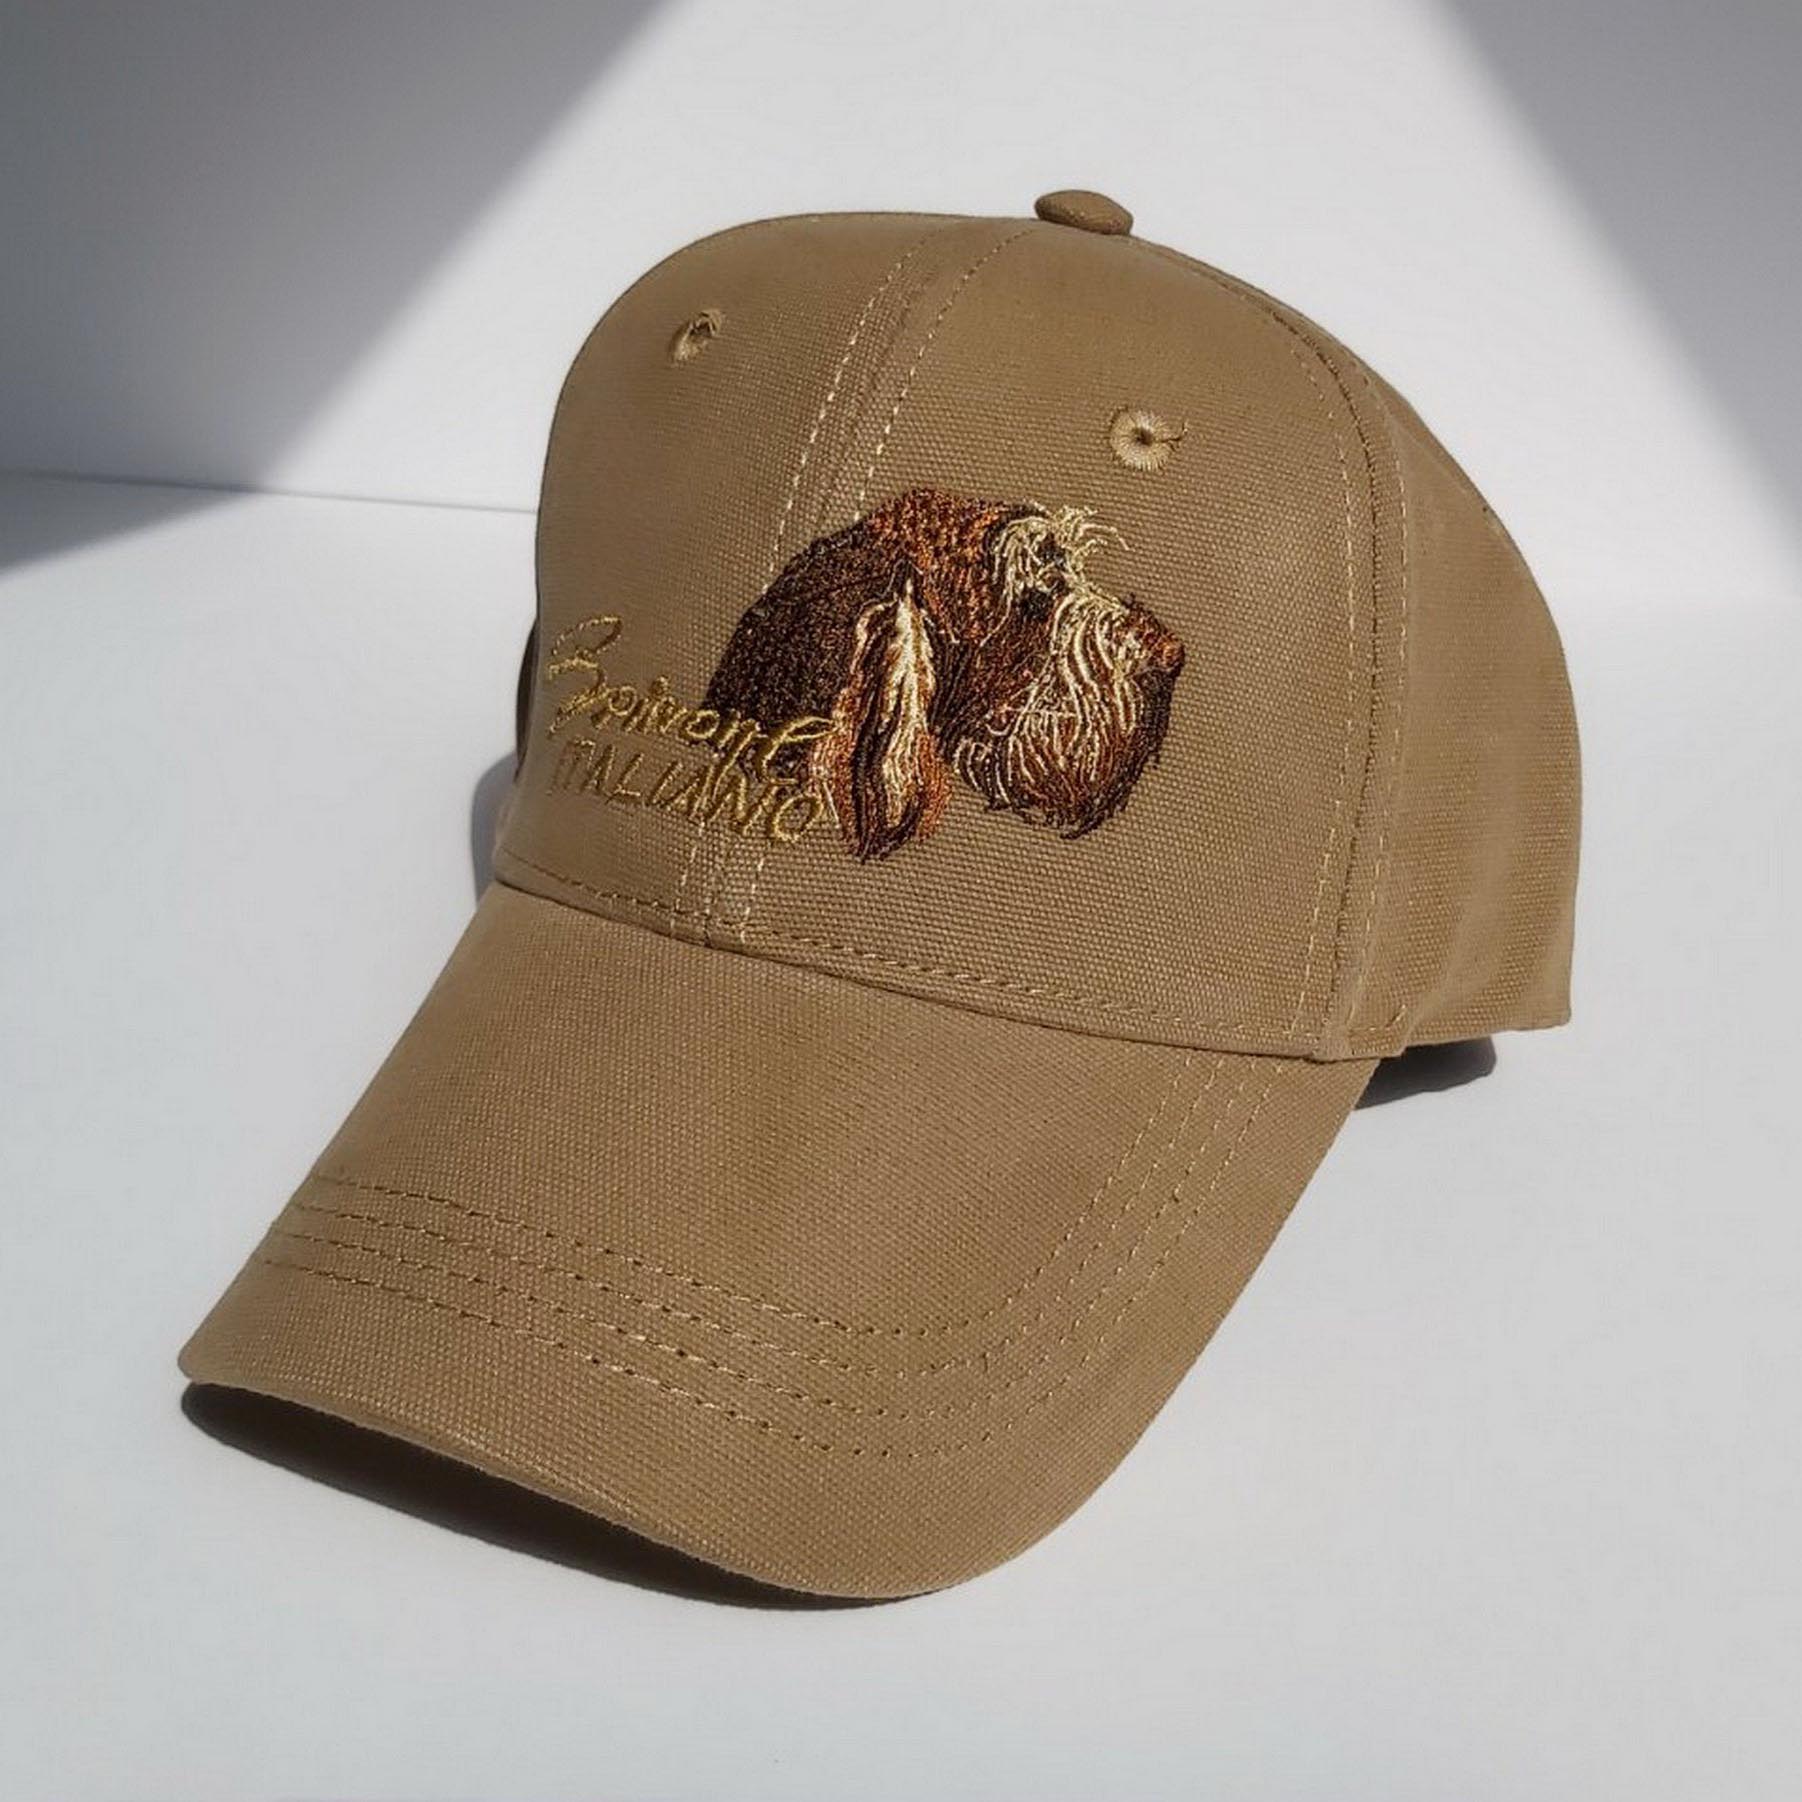 Hunting hat 